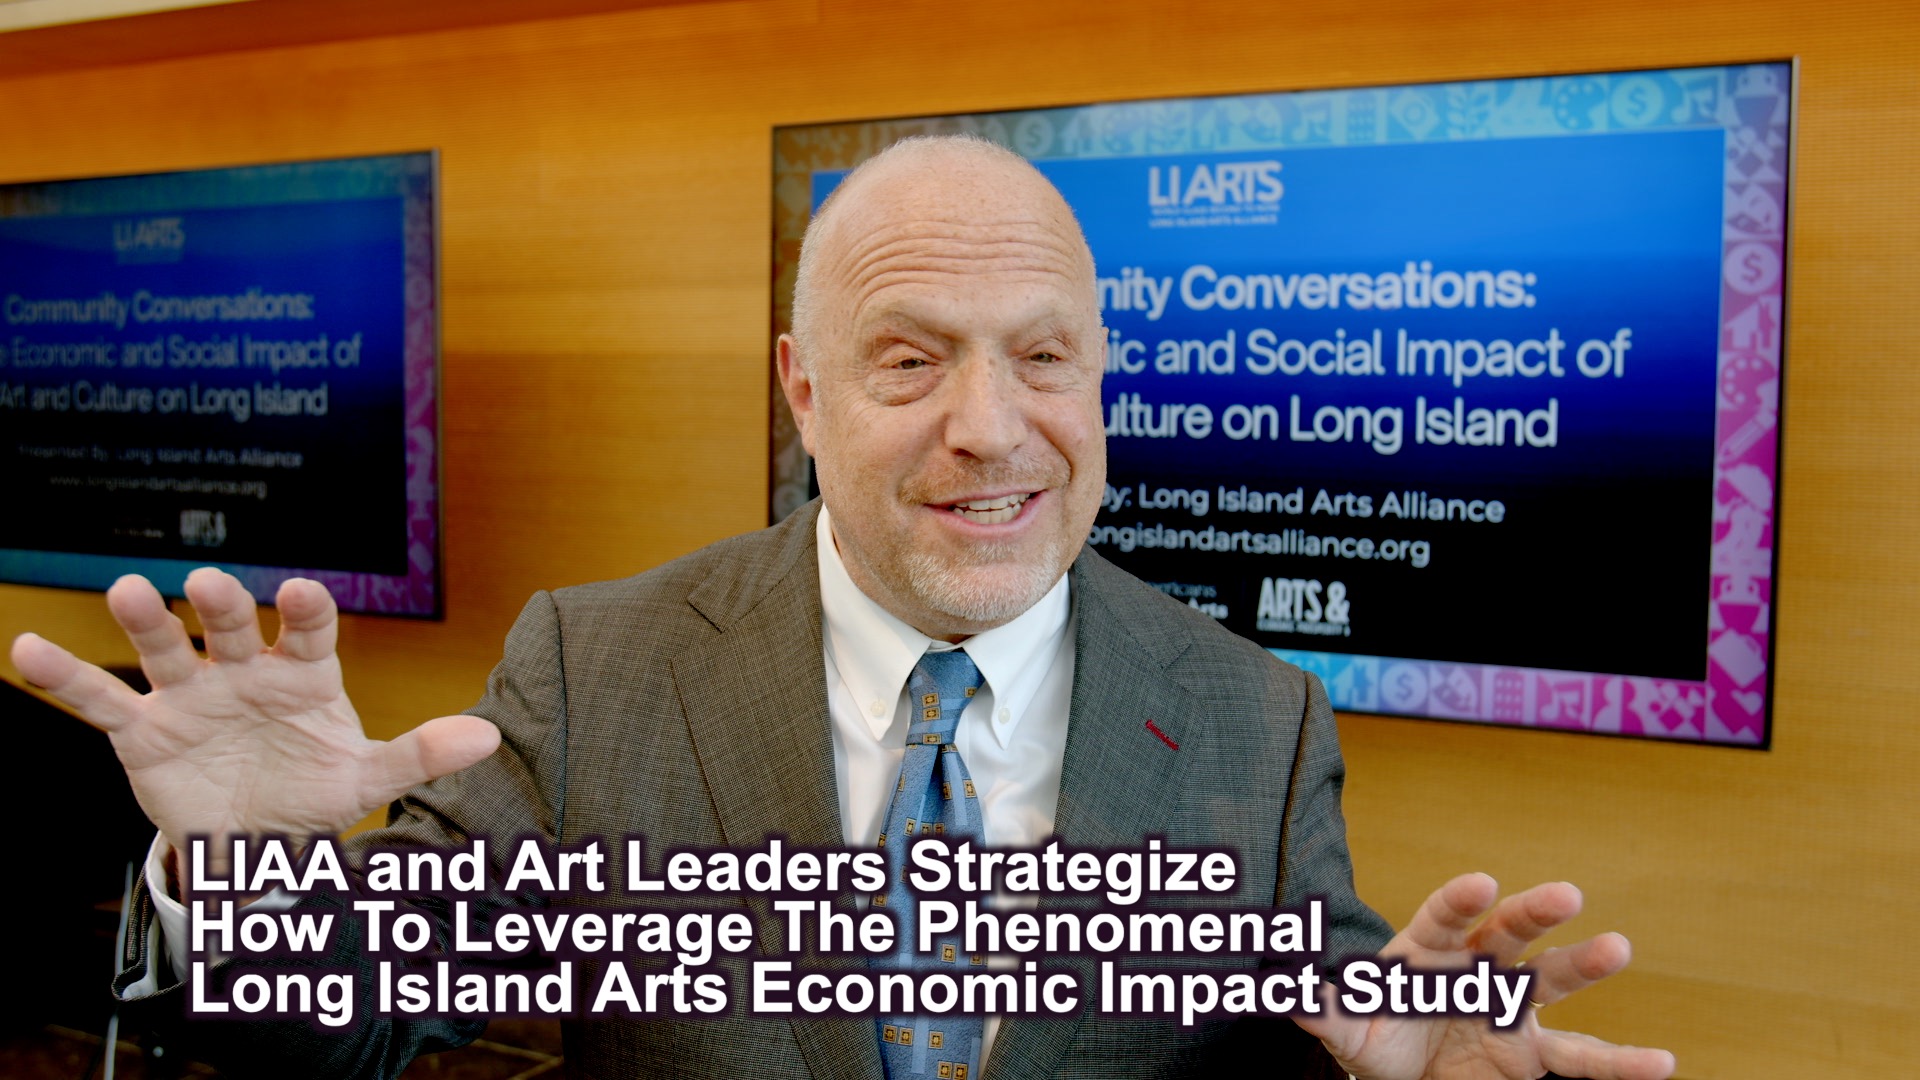 LIAA and Art Leaders Strategize on How To Leverage The Phenomenal LI Arts Economic Impact Study